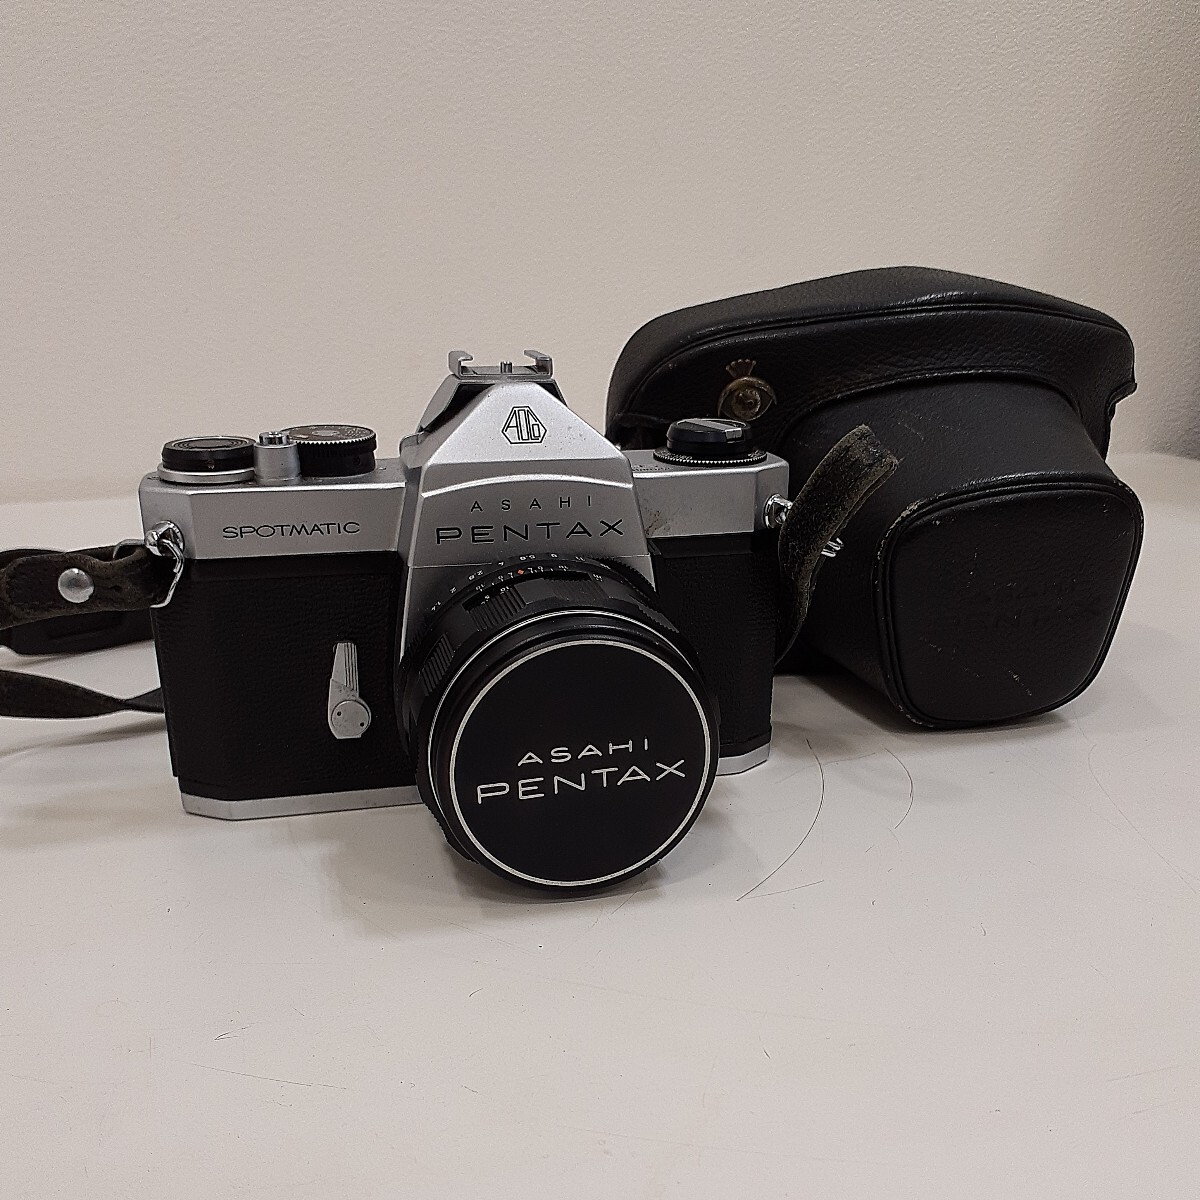 ASAHI PENTAX ペンタックス SPOTMATIC SP / SMC TAKUMAR 50mm F1.4 空シャッターOK フィルムカメラ 現状品_画像1